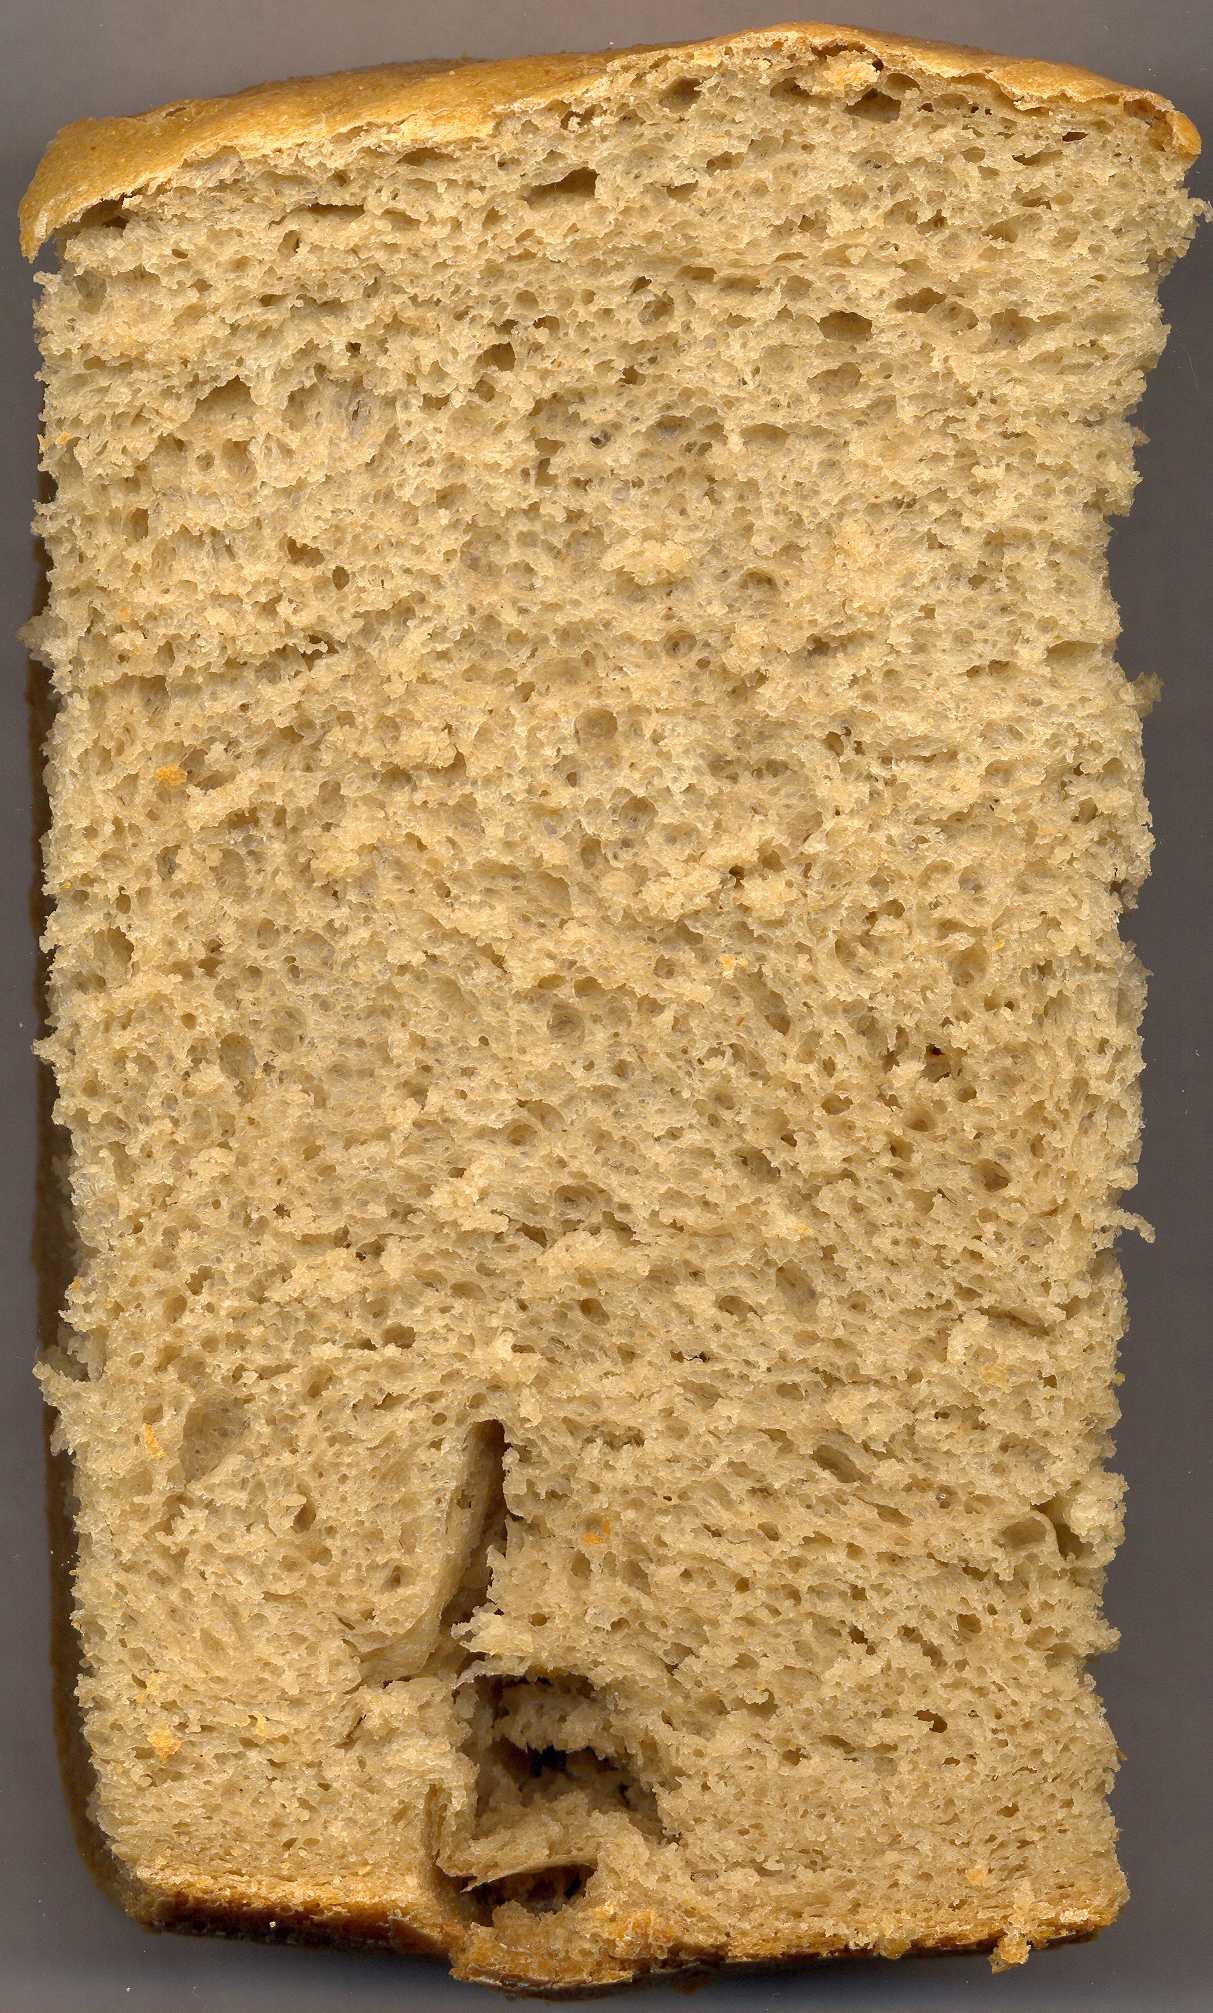 LG HB-1051. Pan de trigo, avena y trigo sarraceno